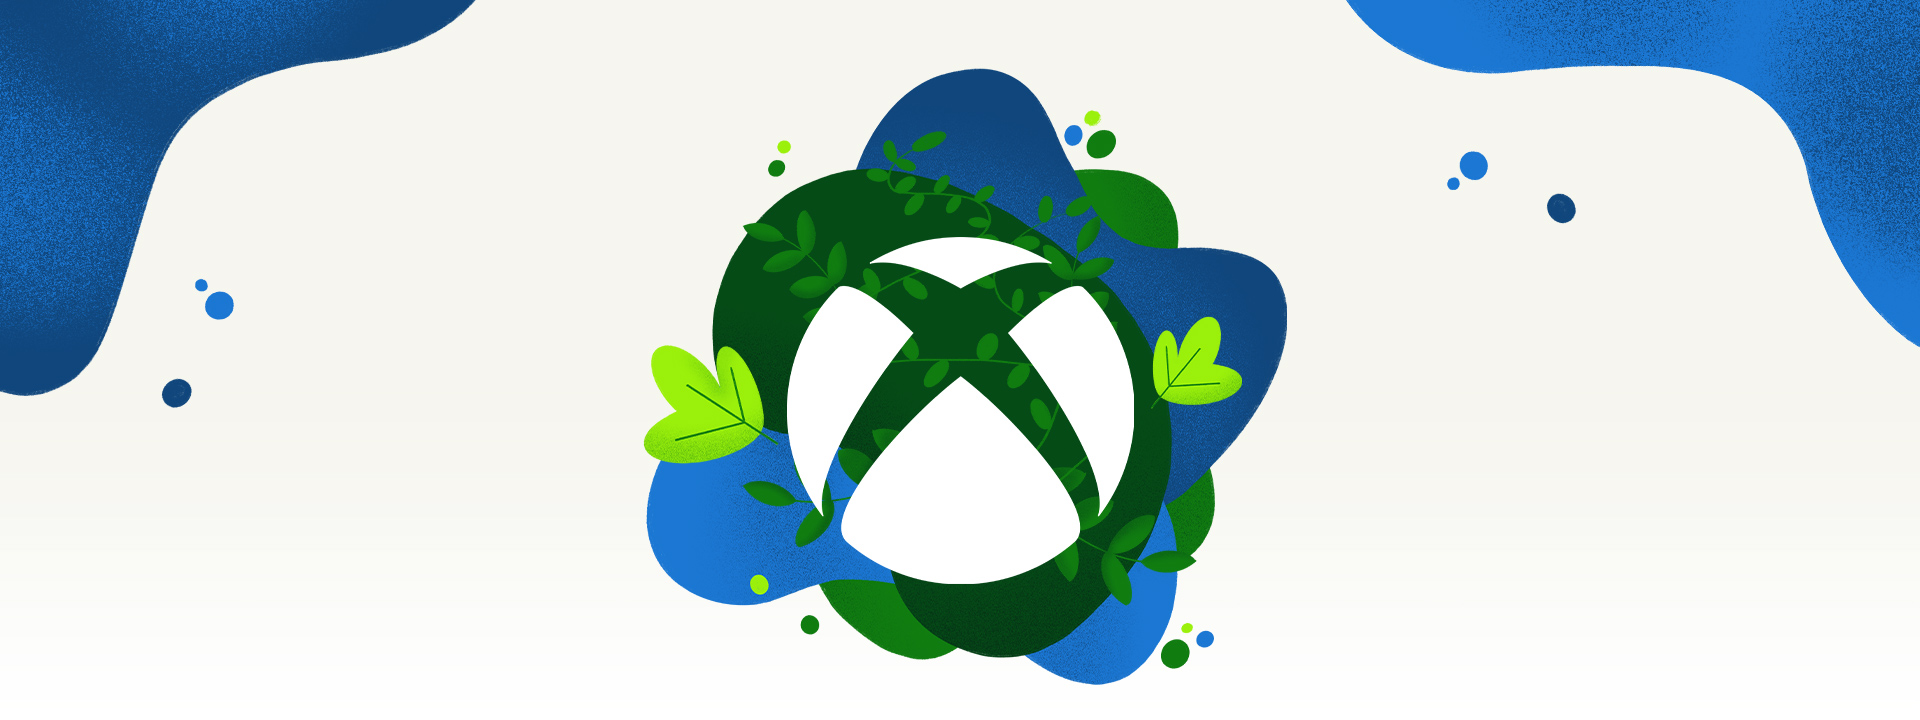 Un logotipo de Xbox rodeado de vegetación y salpicaduras de agua azul.